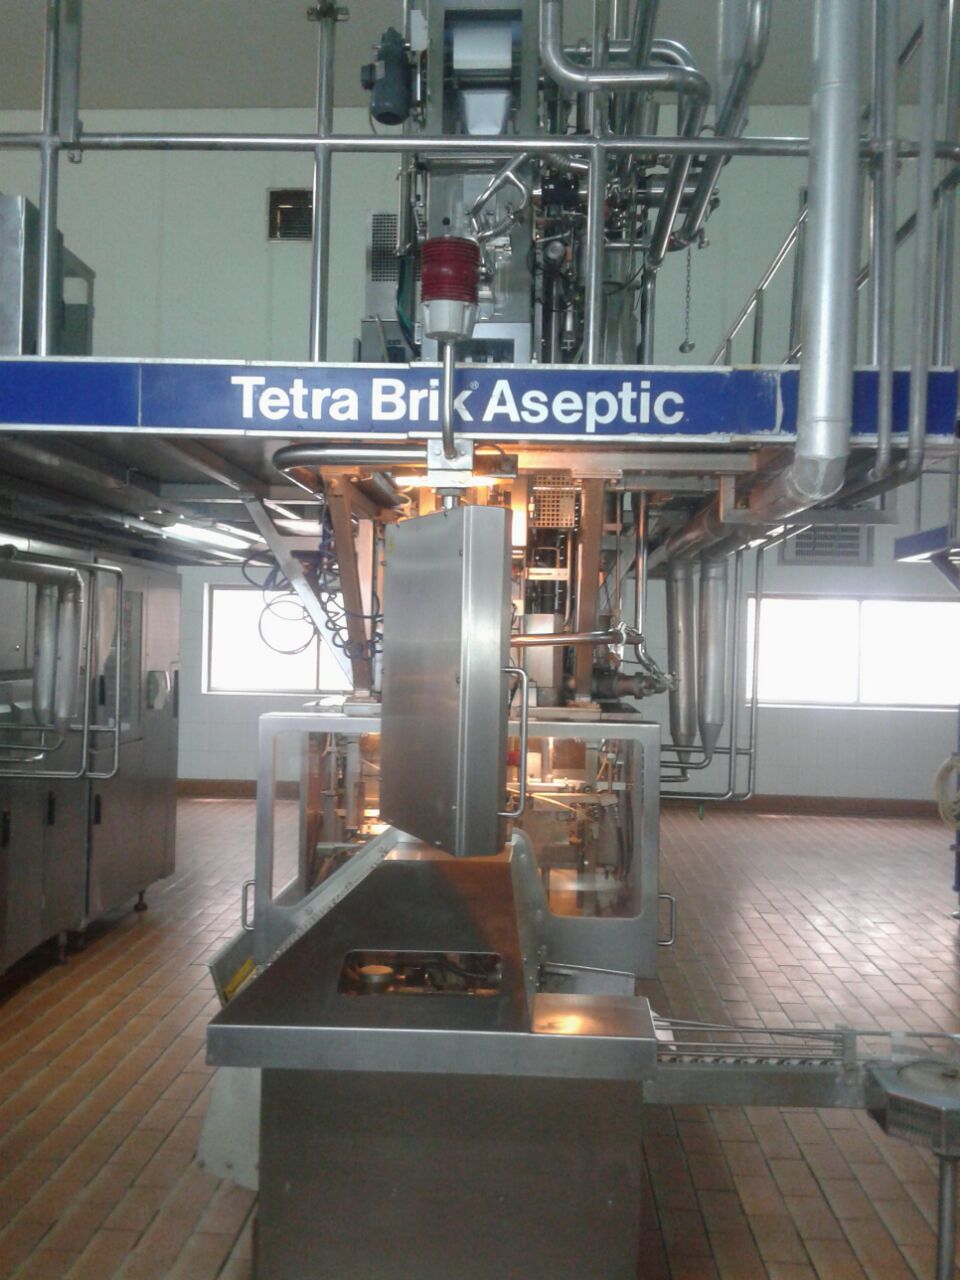 Used Tetra Pak Machines